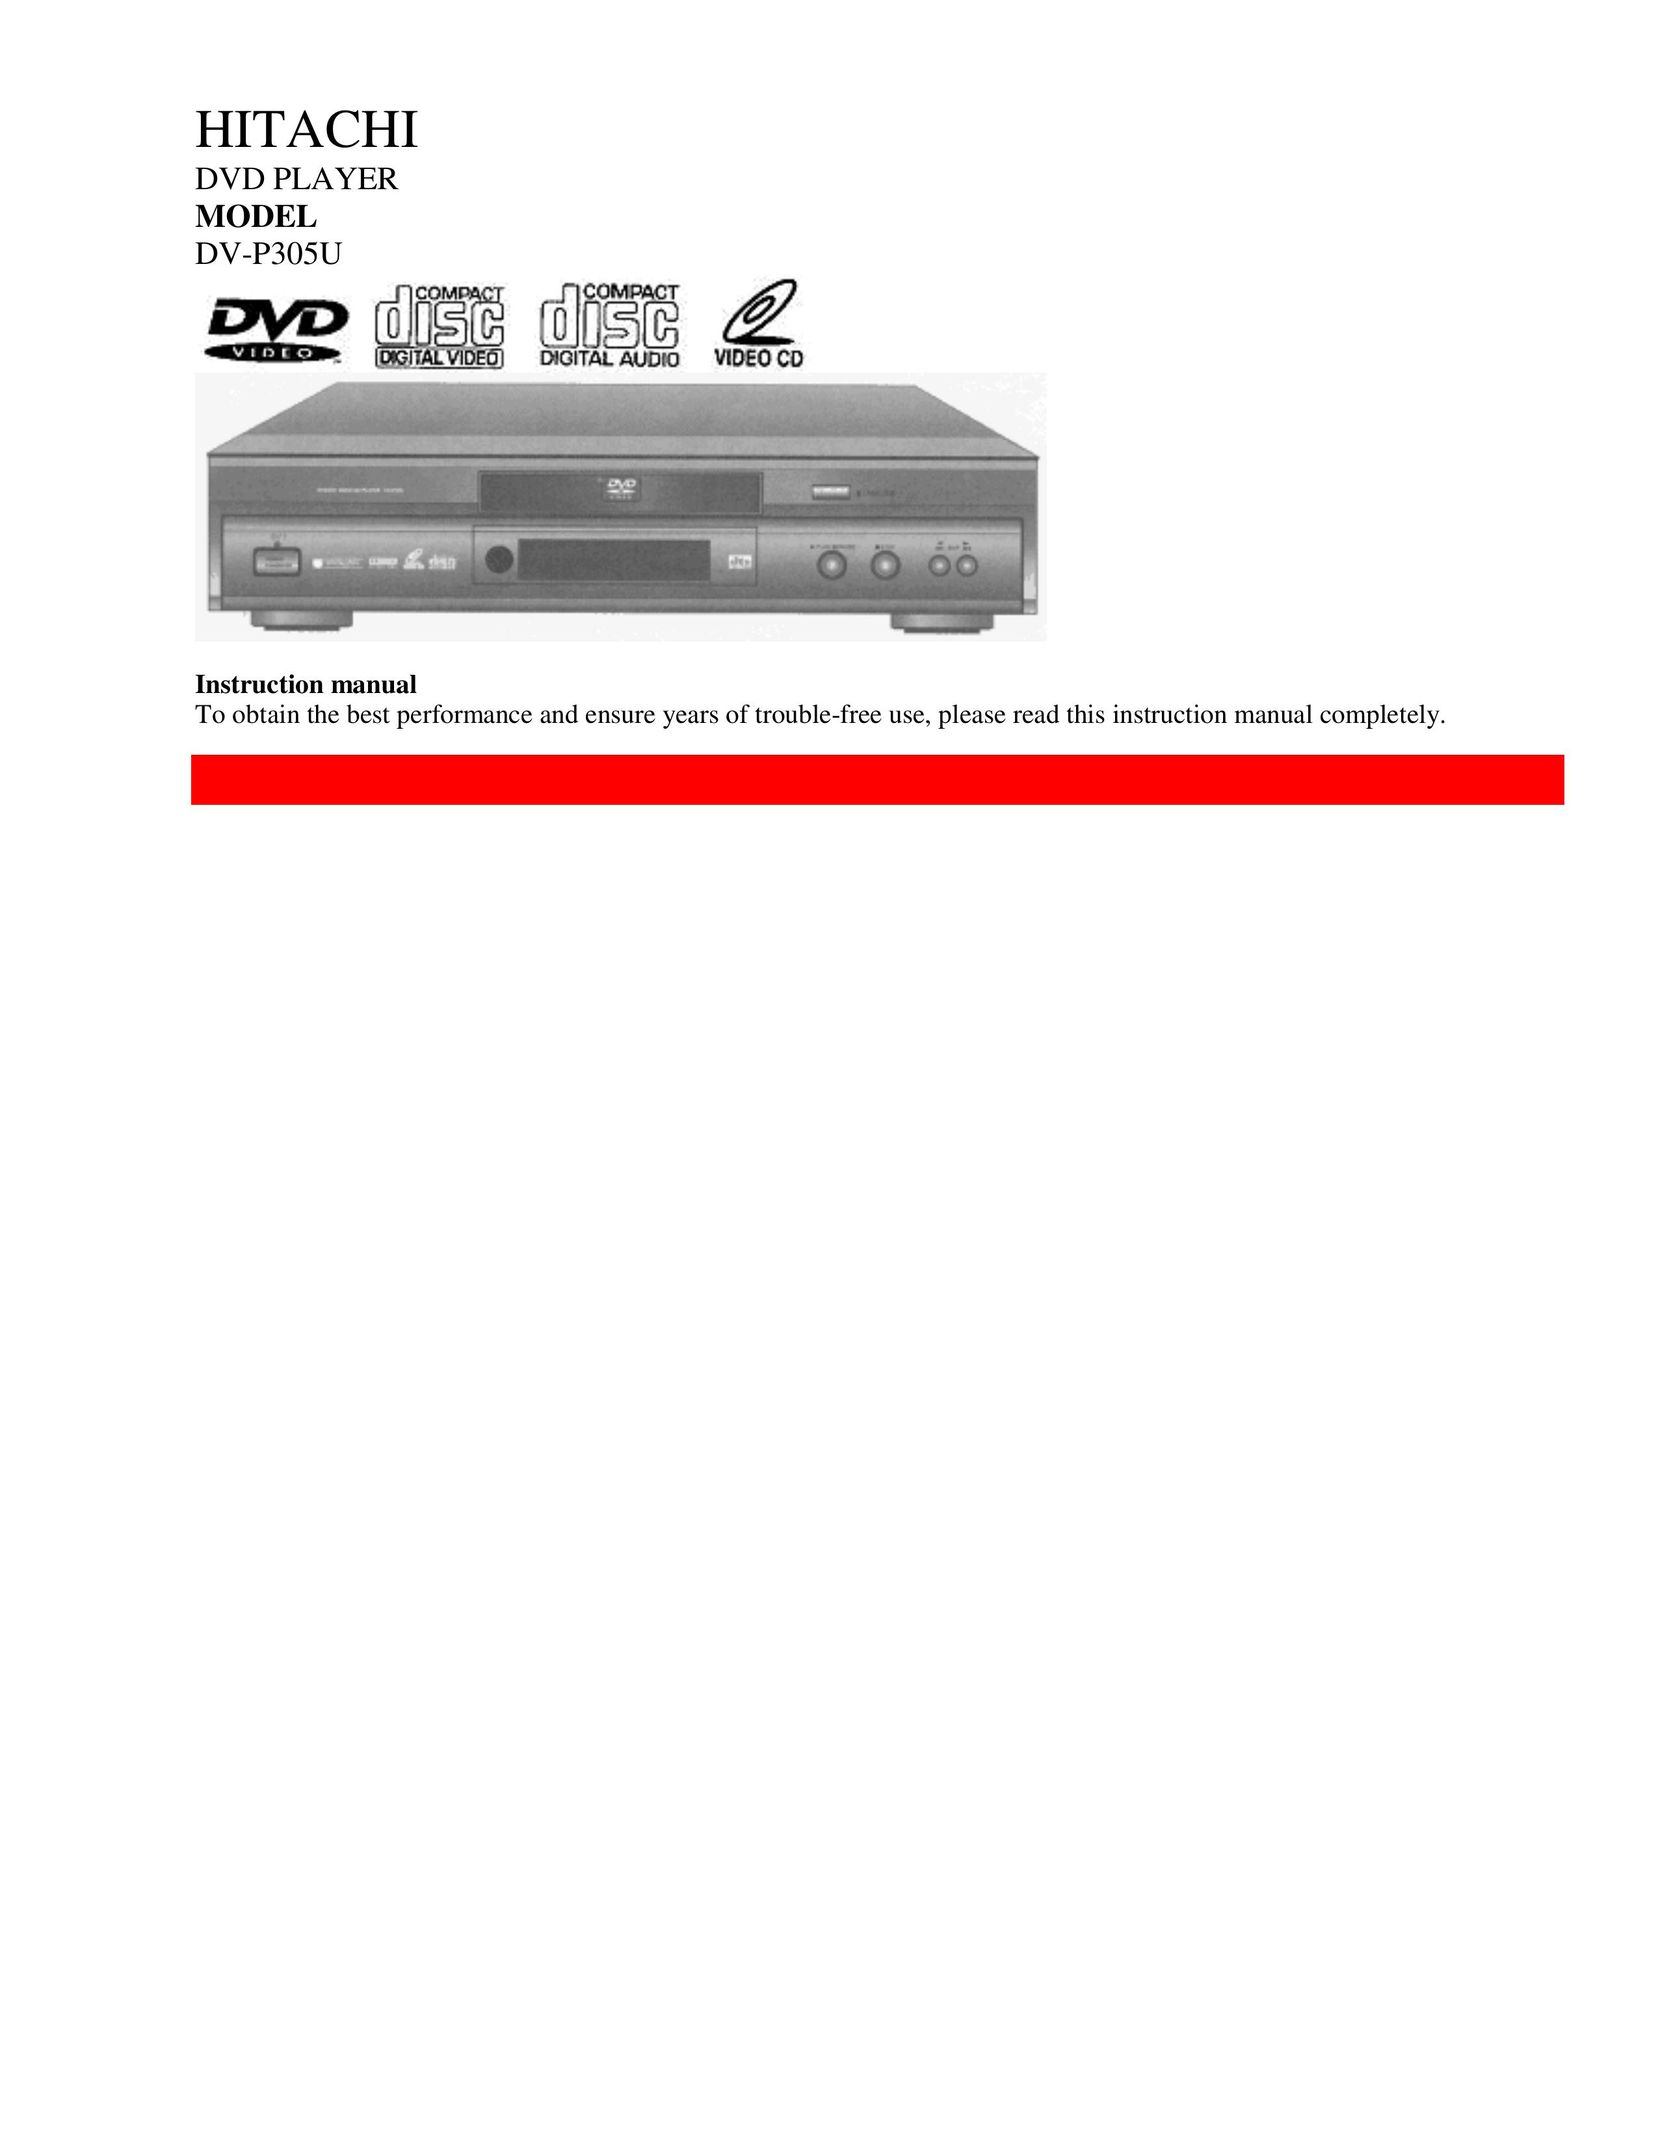 Hitachi DVP305U DVD Player User Manual